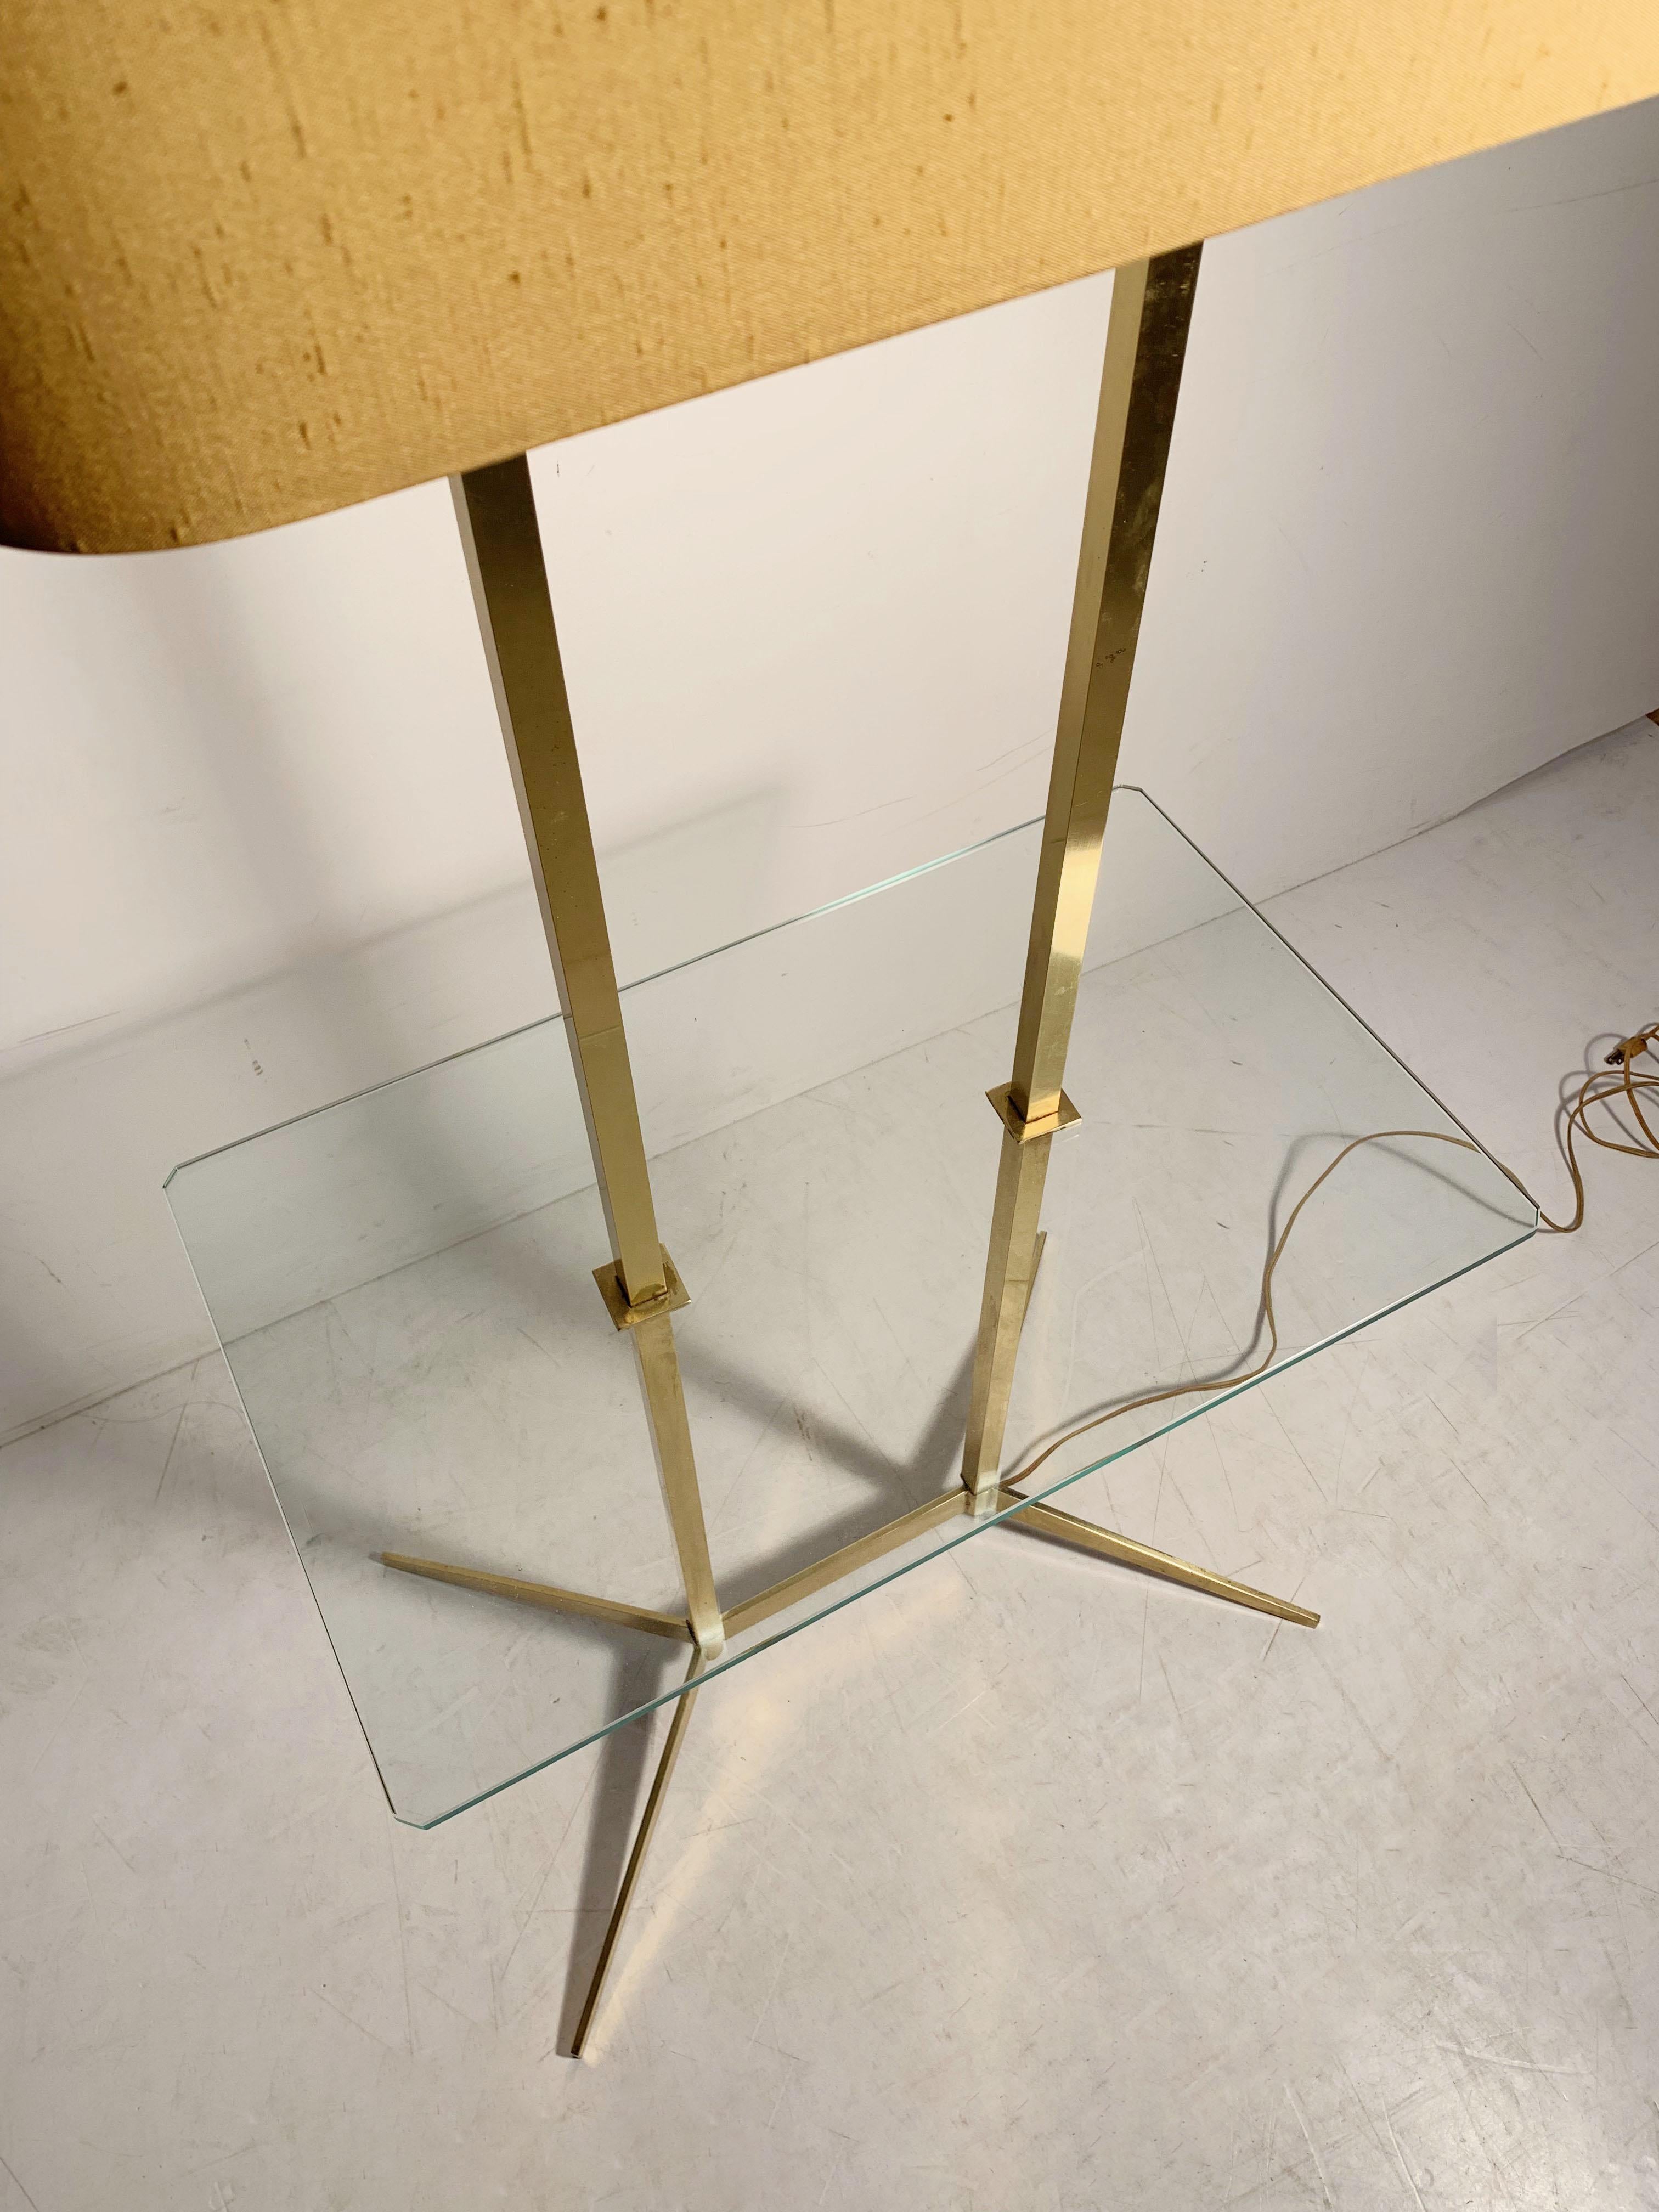 American Vintage Mid-Century Modern Brass Table Floor Lamp attributed to Stiffel